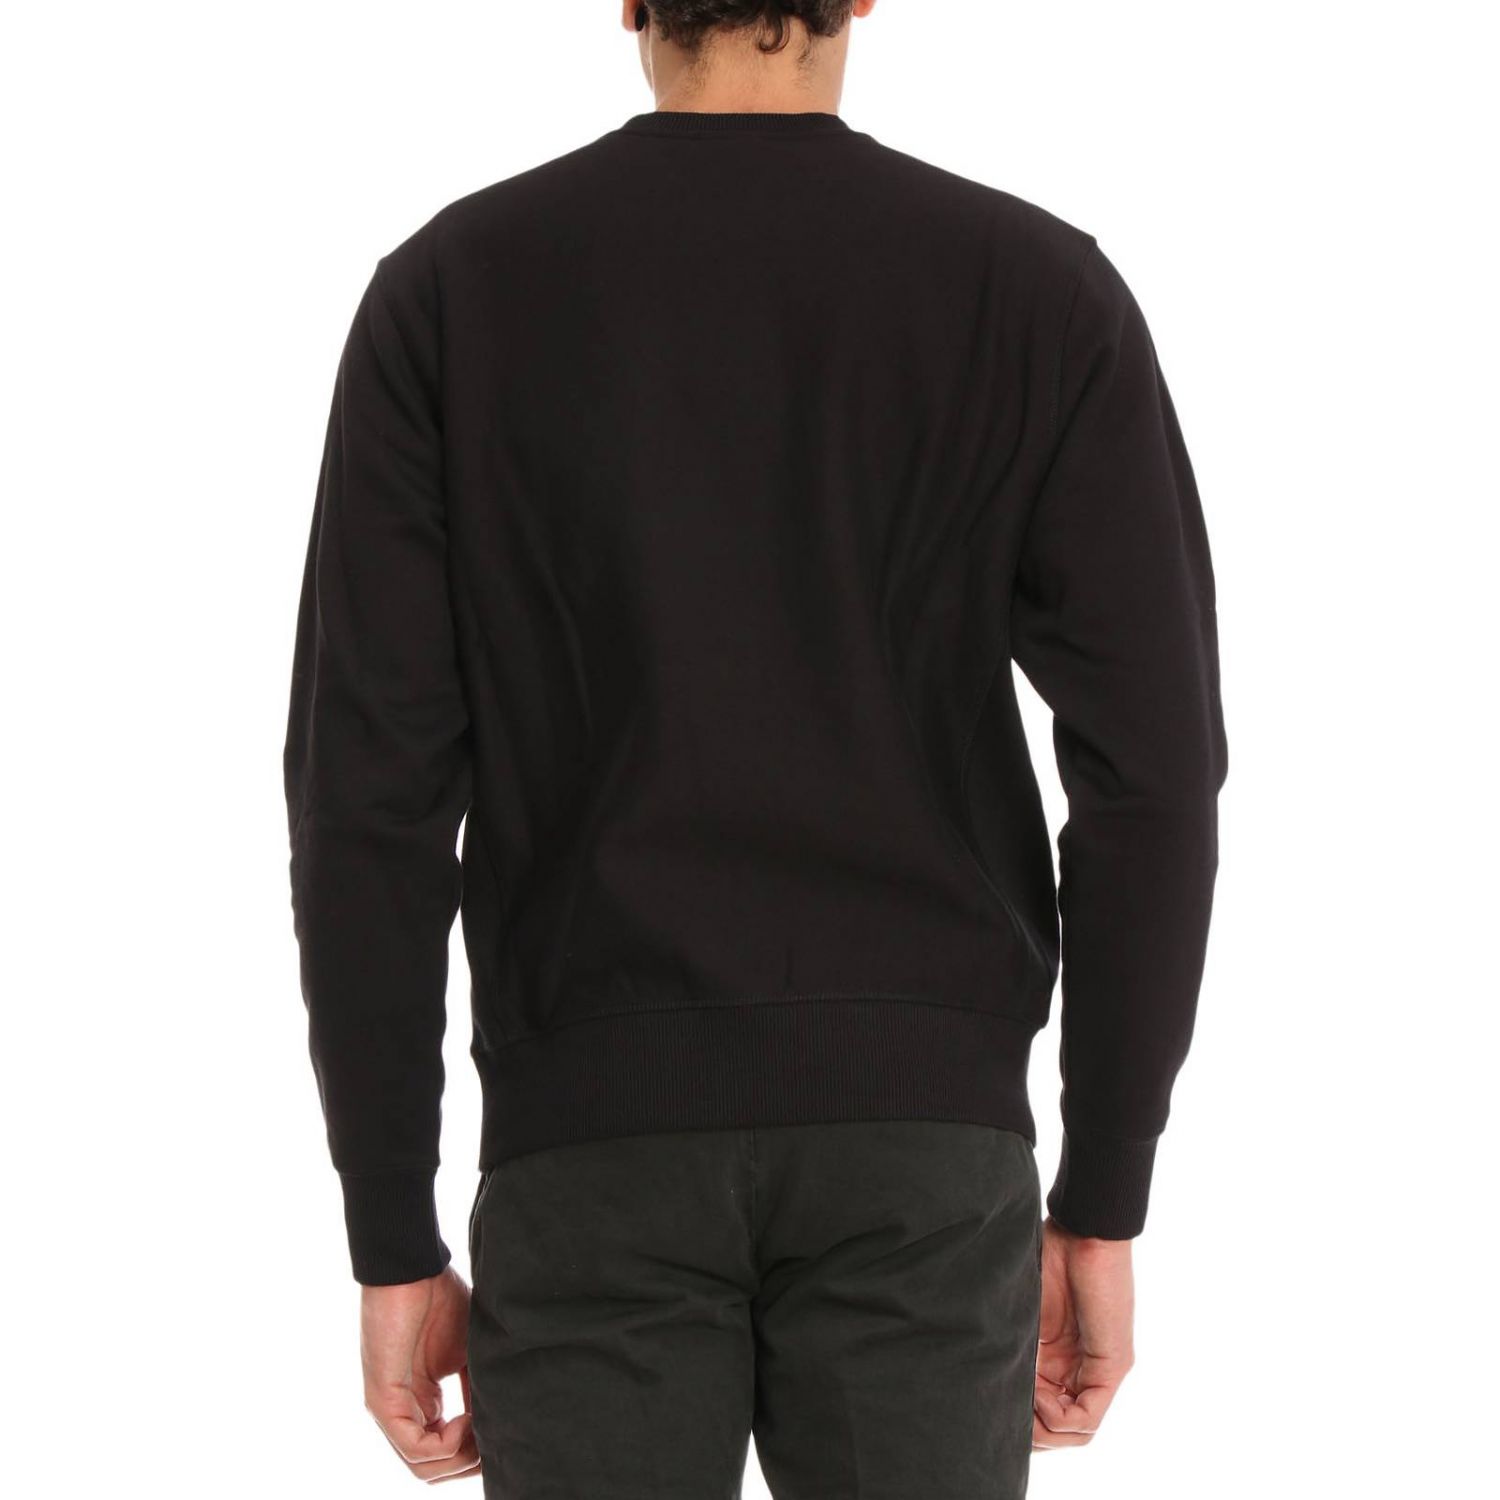 Belstaff Outlet: Sweater men - Black | Sweatshirt Belstaff 71130467 ...